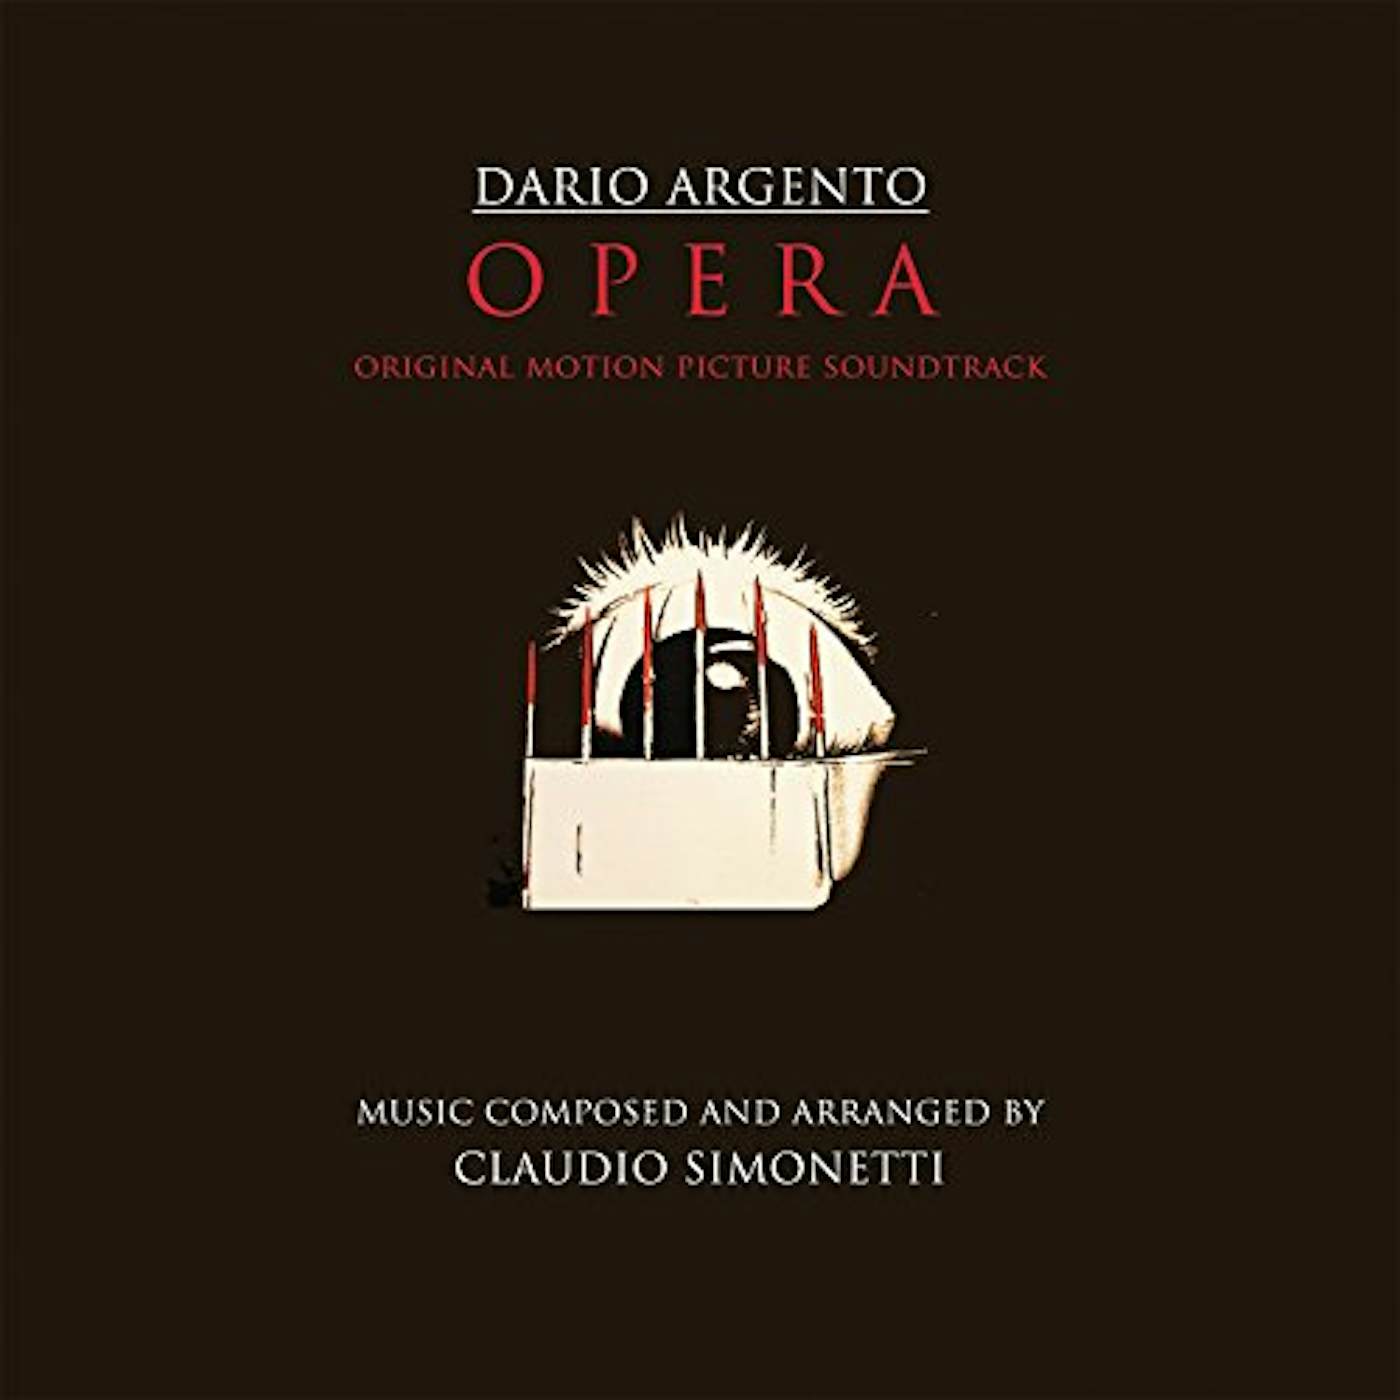 Claudio Simonetti OPERA (DARIO ARGENTO) - Original Soundtrack Vinyl Record